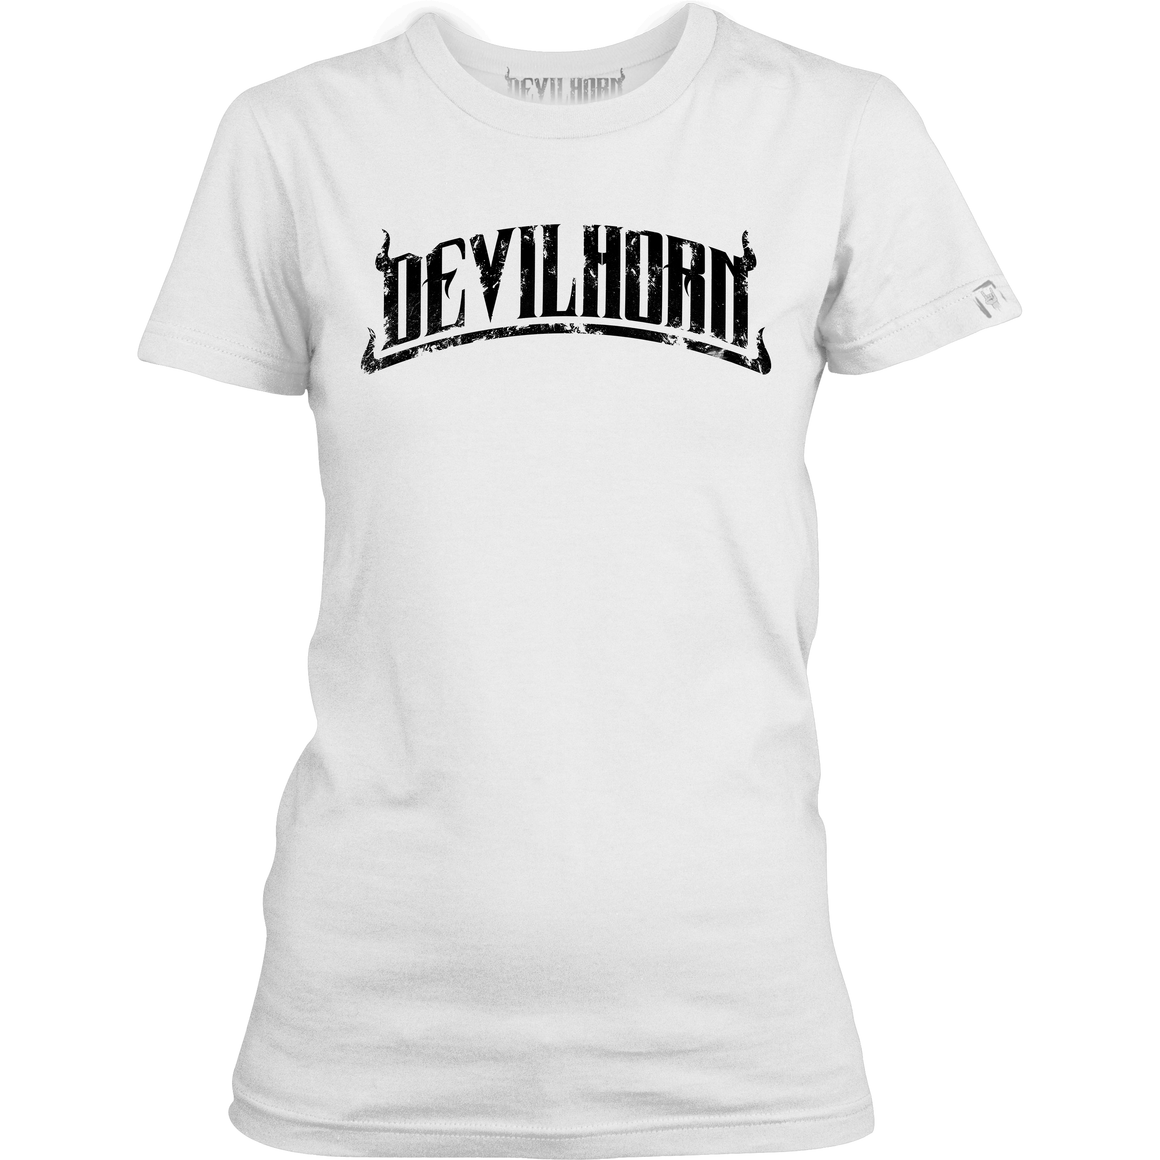 DEVILHORN CURVED LOGO LADIES t shirt - DEVILHORN